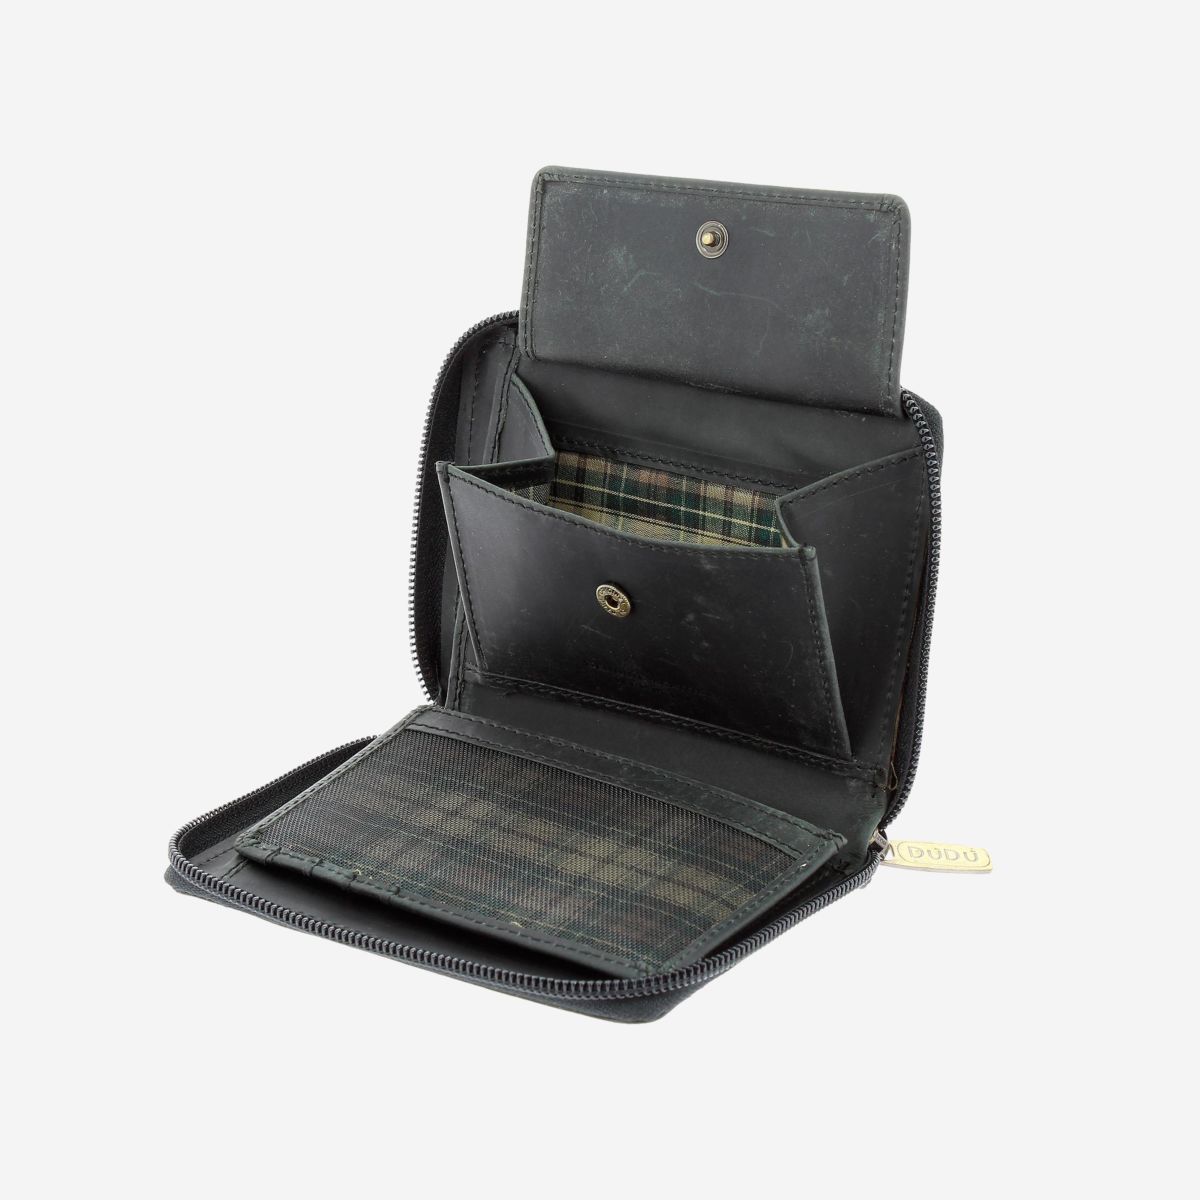 DuDu Mens Leather Wallet with Zip - Black